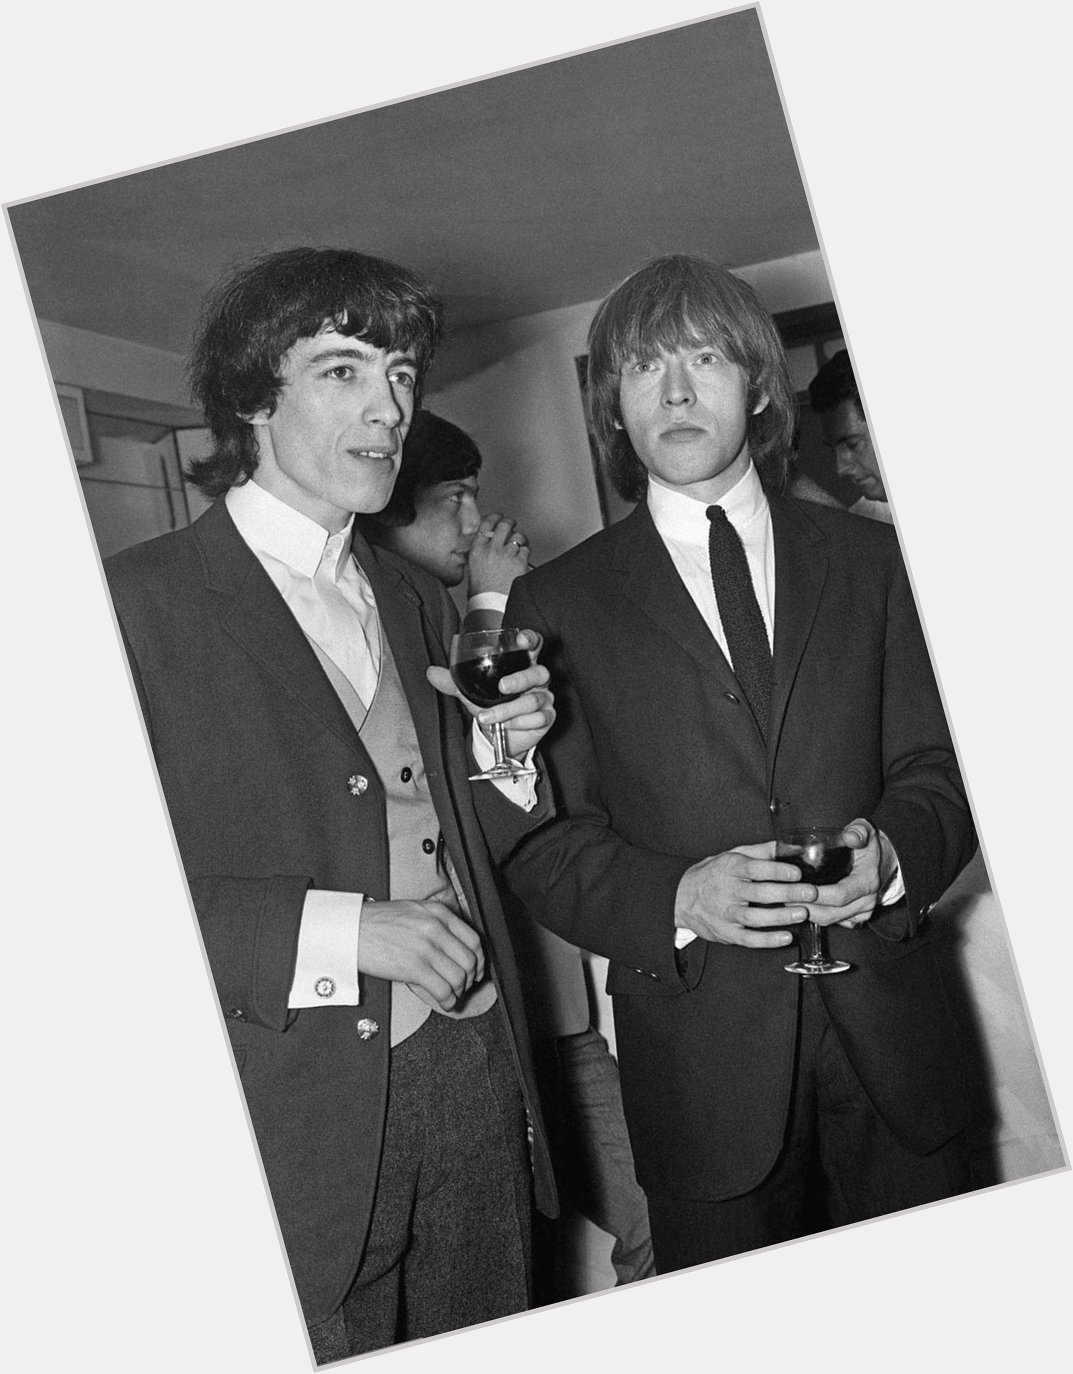 Happy 85th birthday to Bill Wyman of The Rolling Stones 